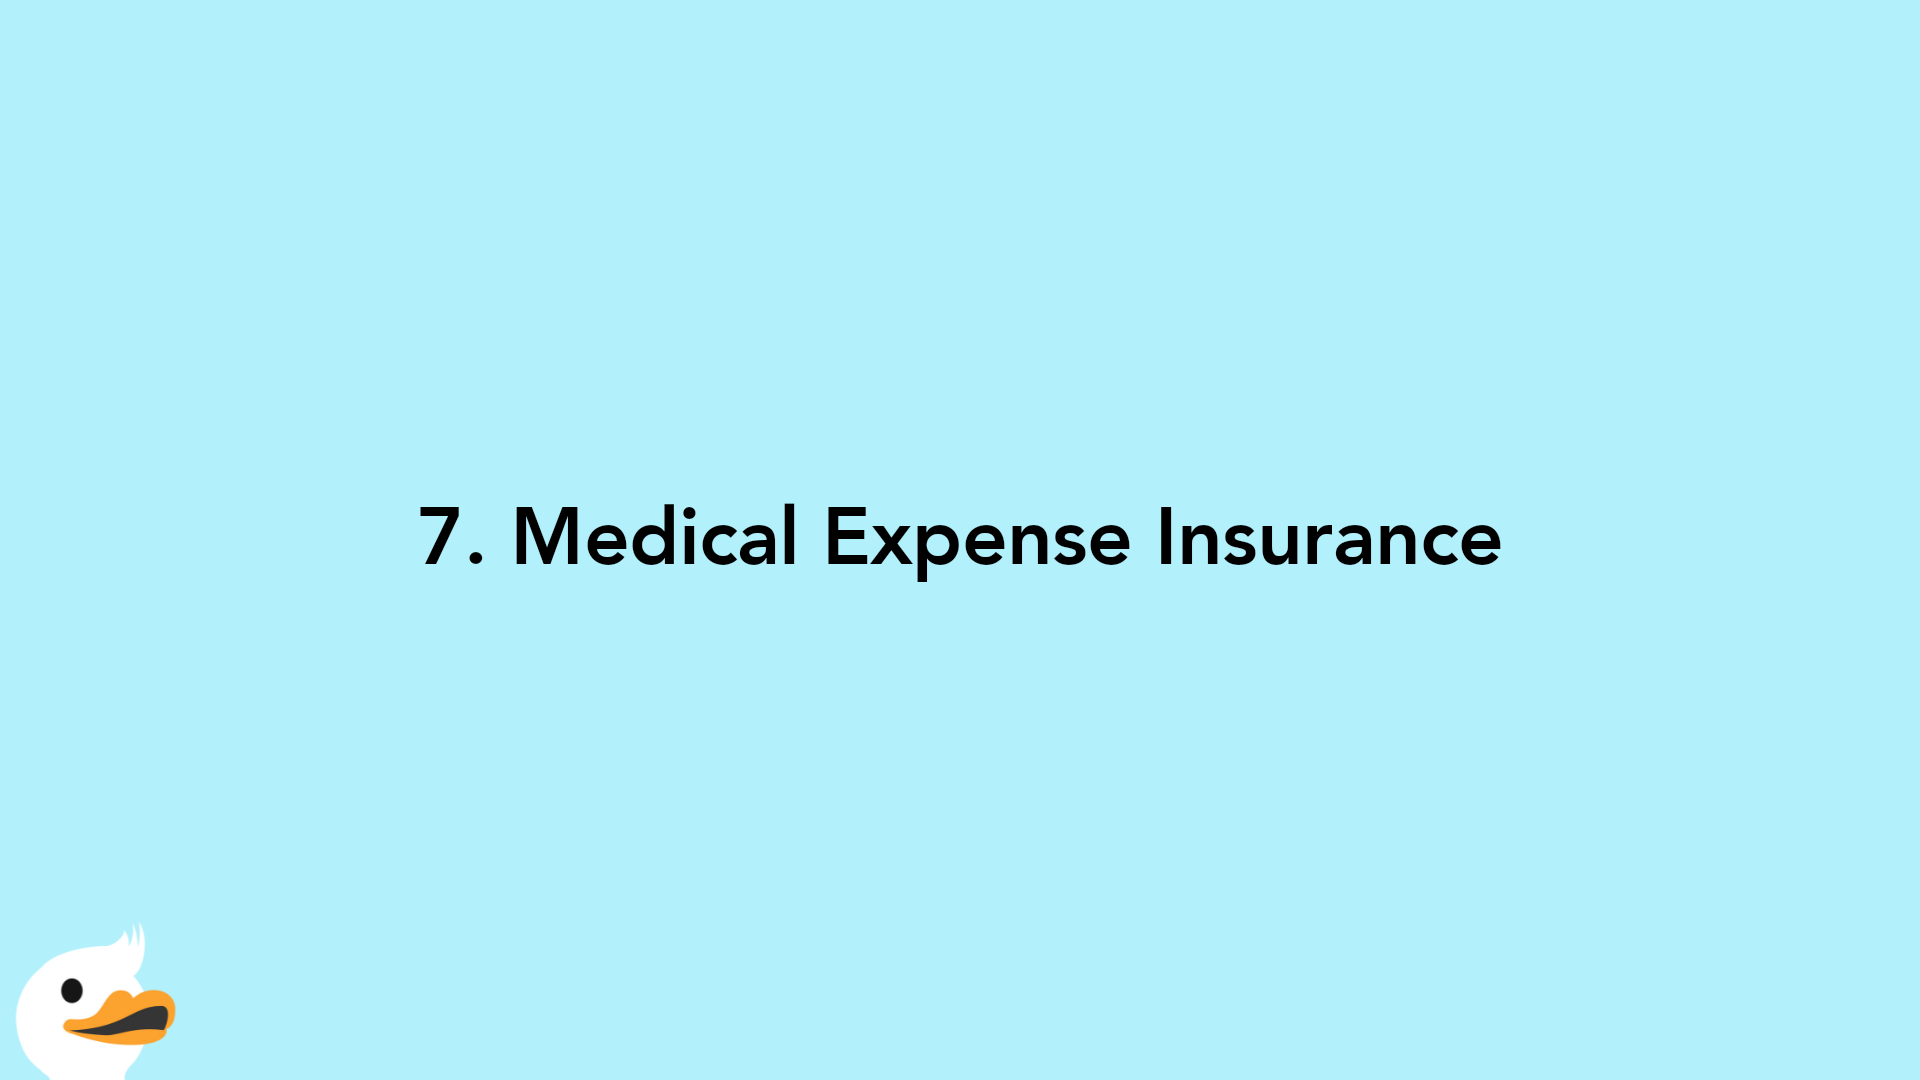 7. Medical Expense Insurance